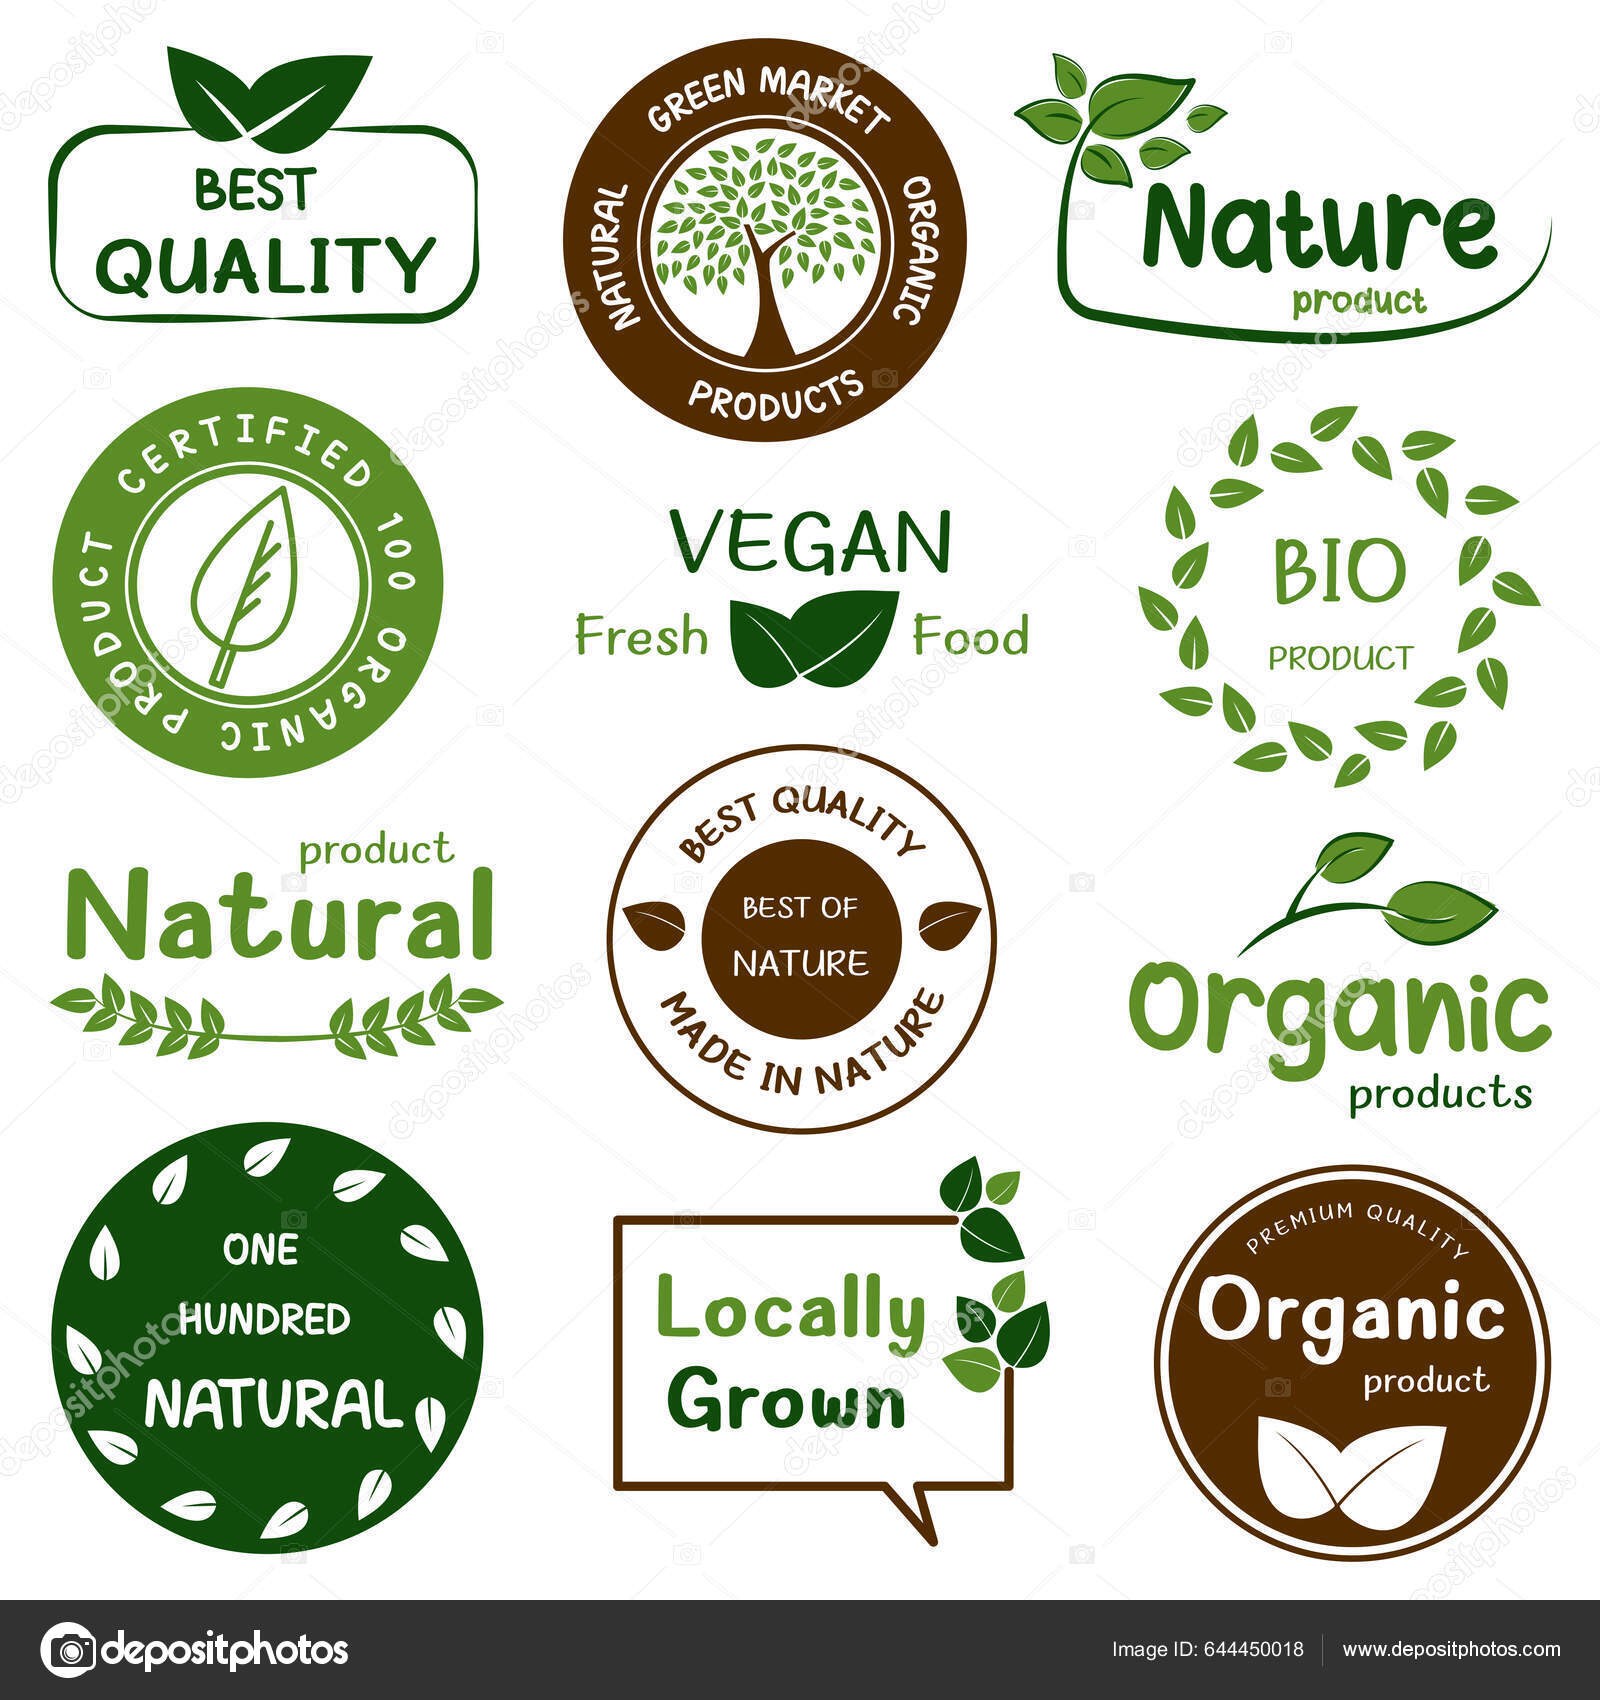 https://st5.depositphotos.com/77317496/64445/v/1600/depositphotos_644450018-stock-illustration-organic-food-natural-food-healthy.jpg